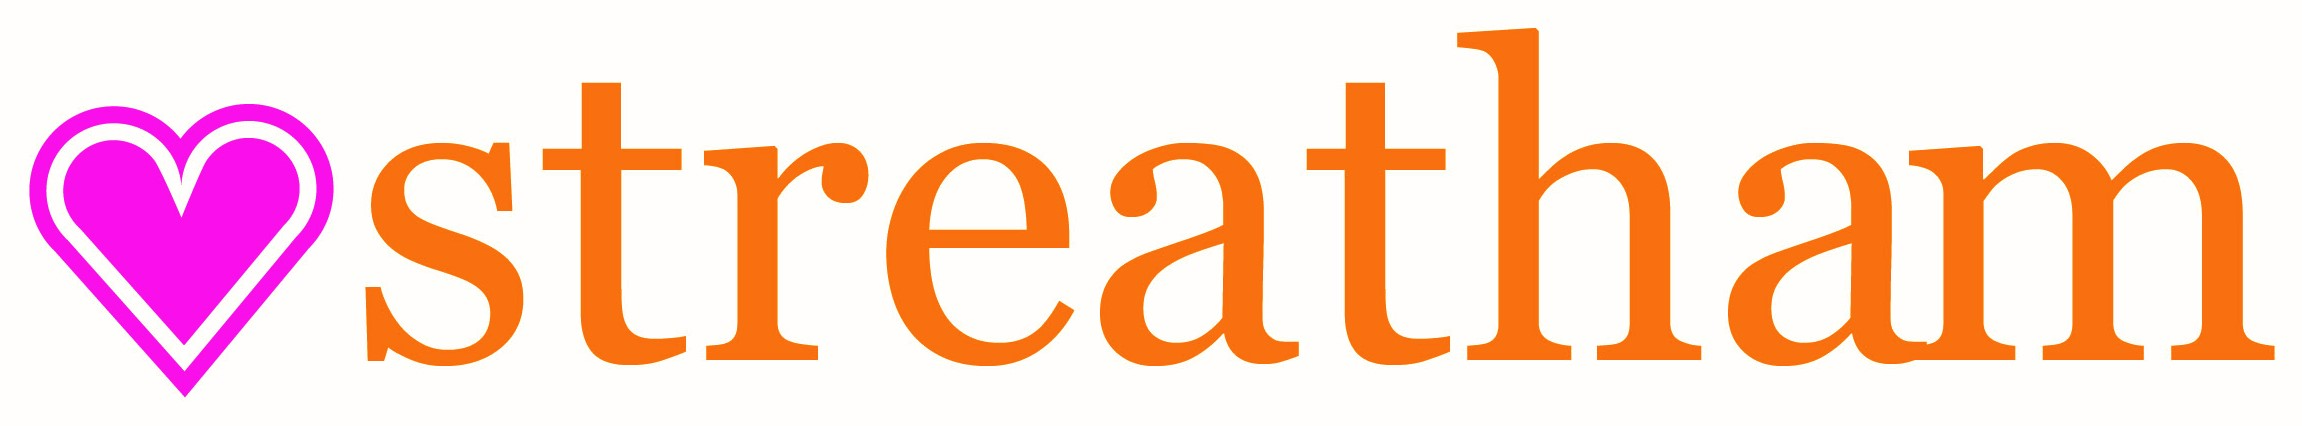 Heart Streatham logo